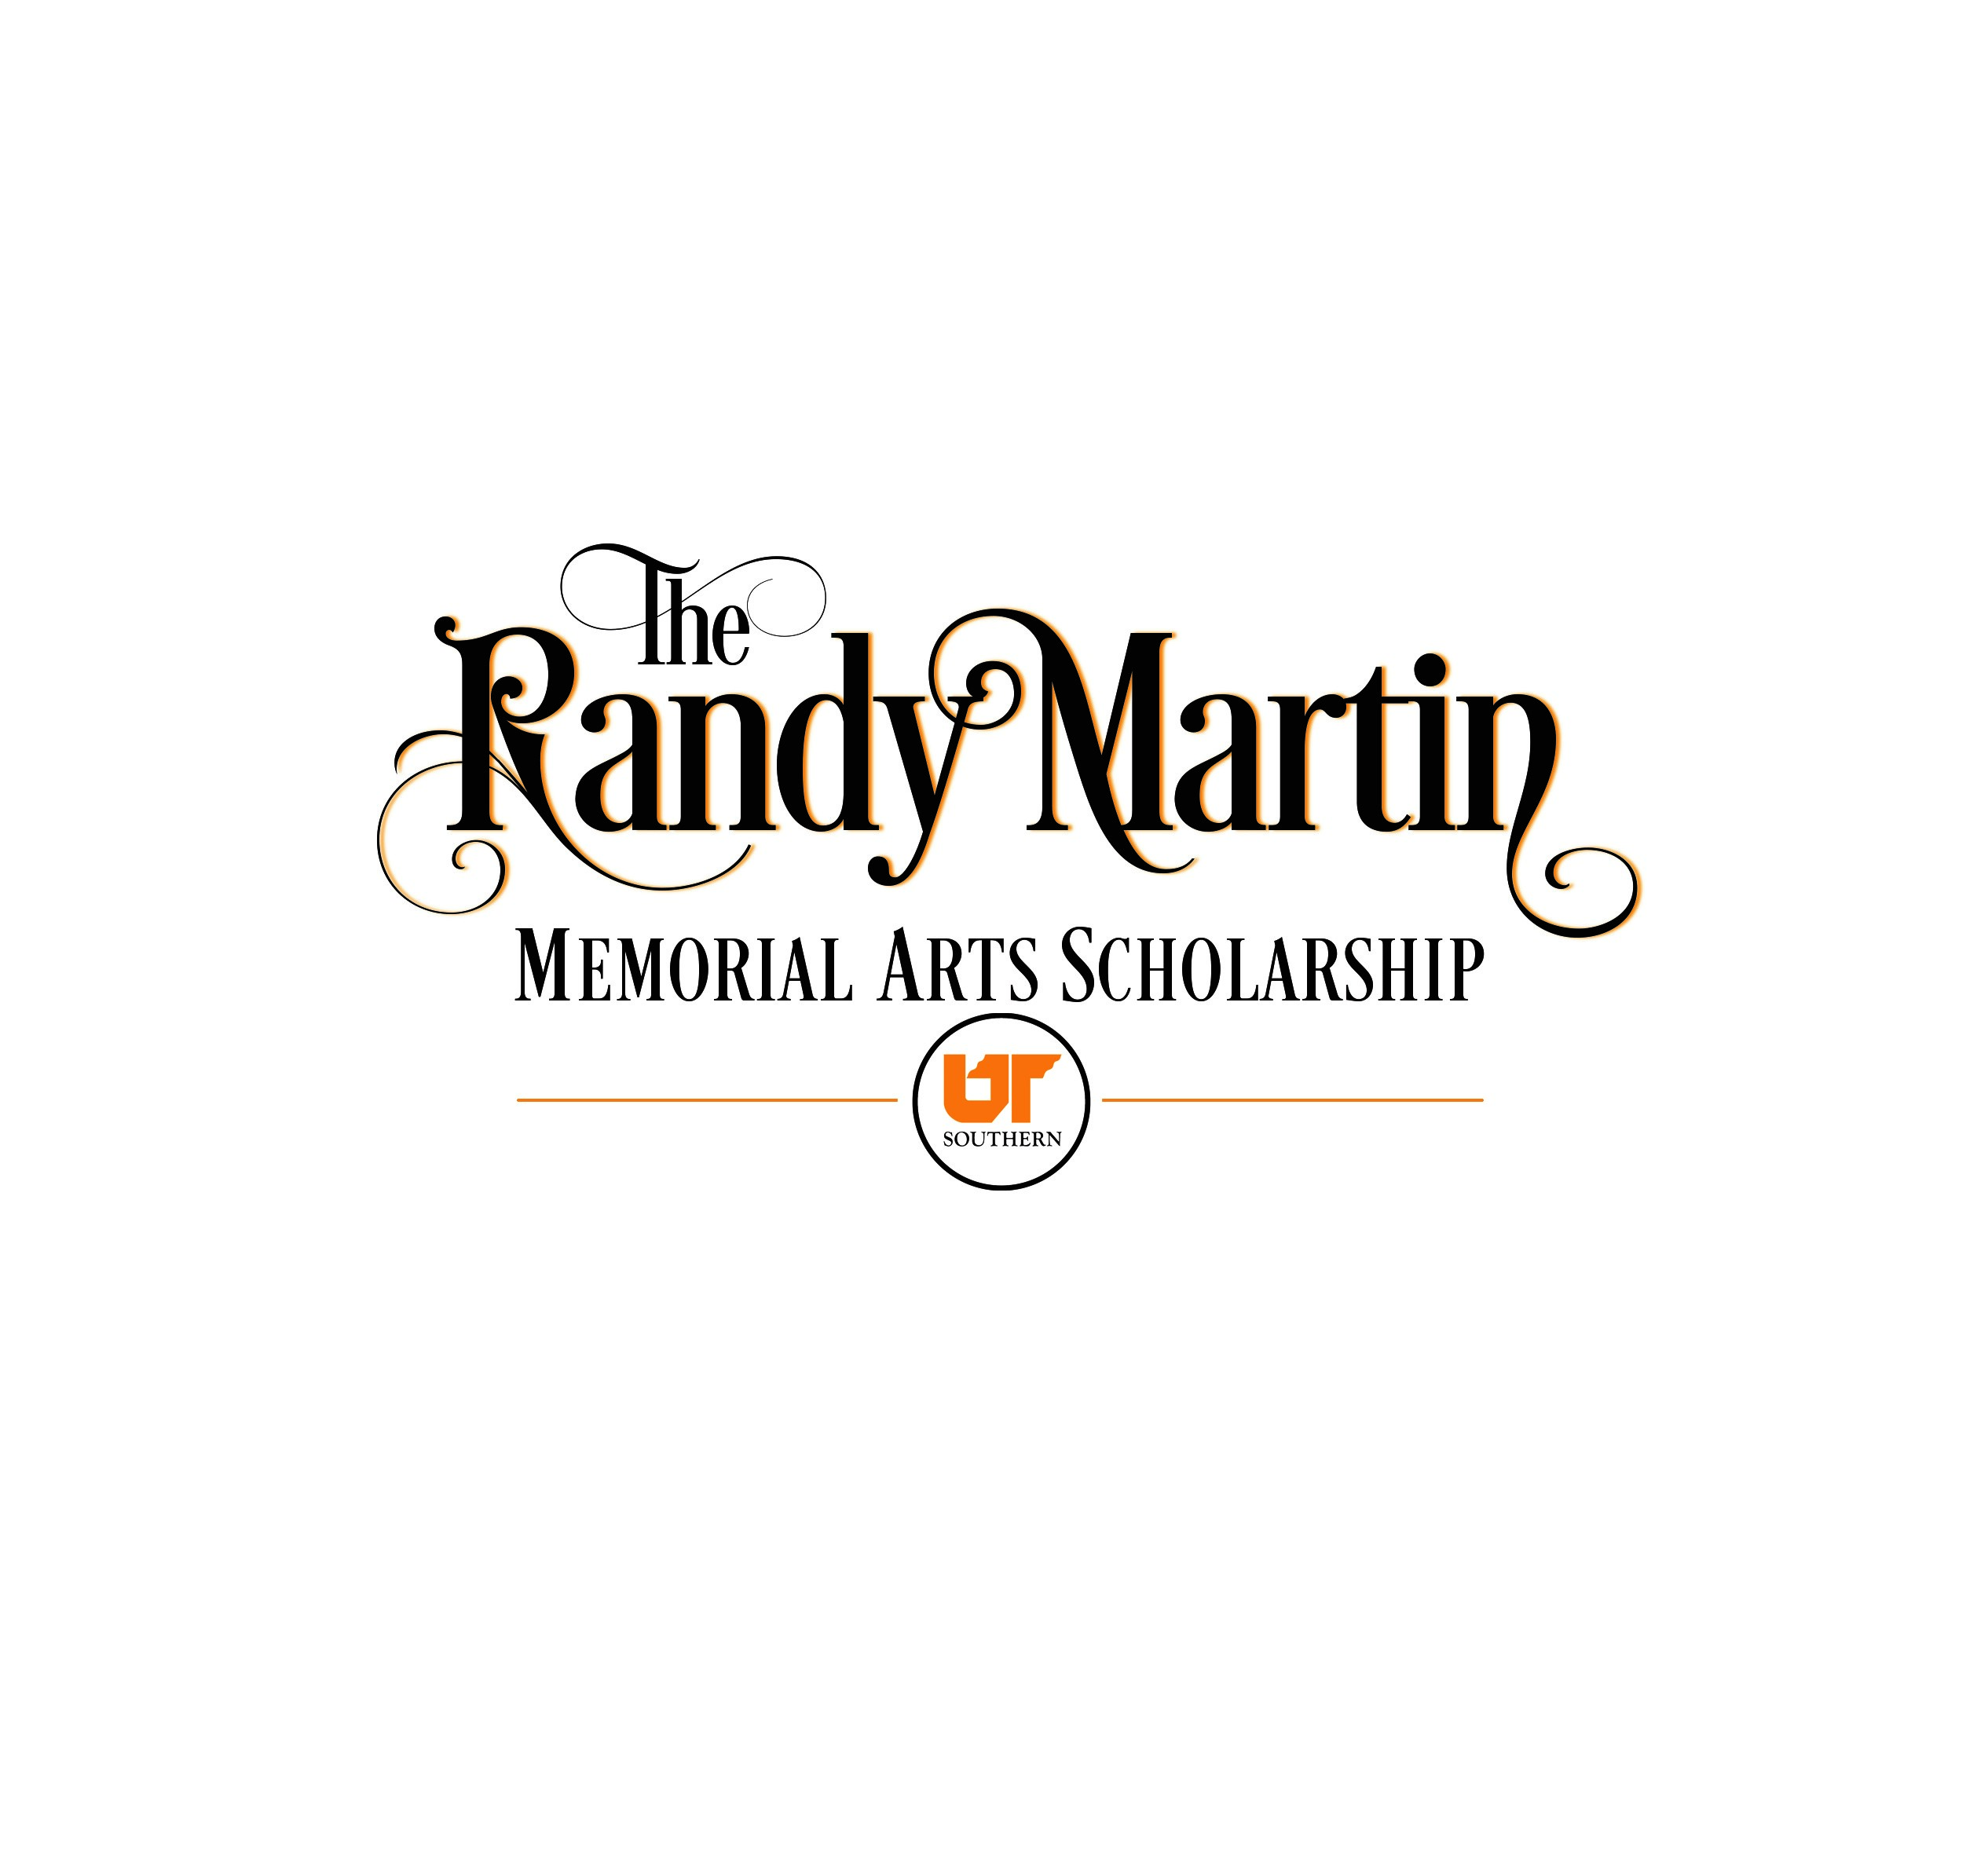 Martin & Company Creates Randy Martin Memorial Arts Scholarship | THE SHOP